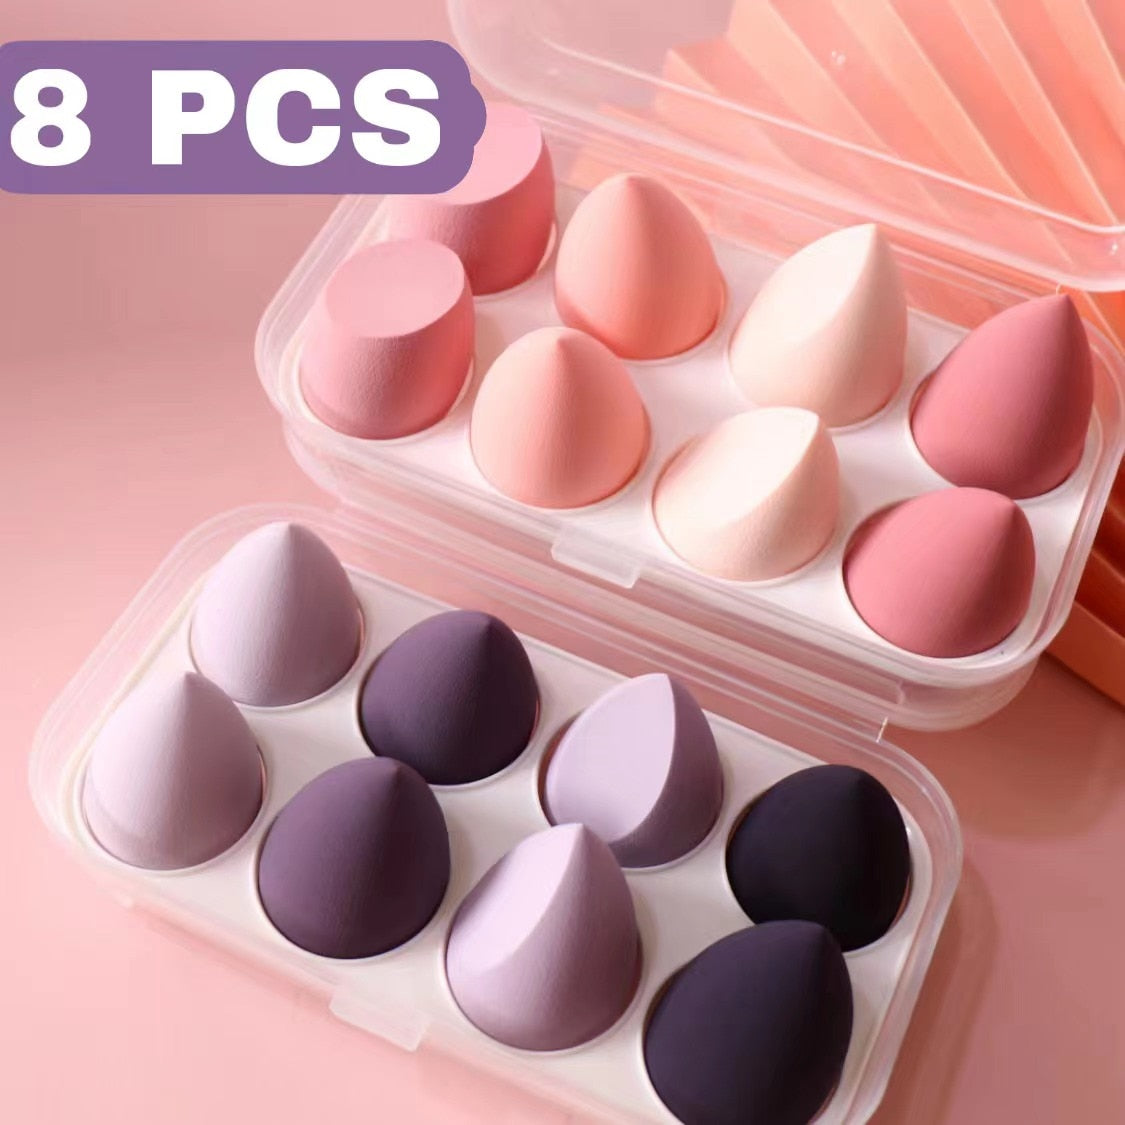 8 PCS Makeup puff  Sponge Cosmetics Powder Puff Foundation Wholesale Make-up for women Blender Makeup Tool Set Instruments